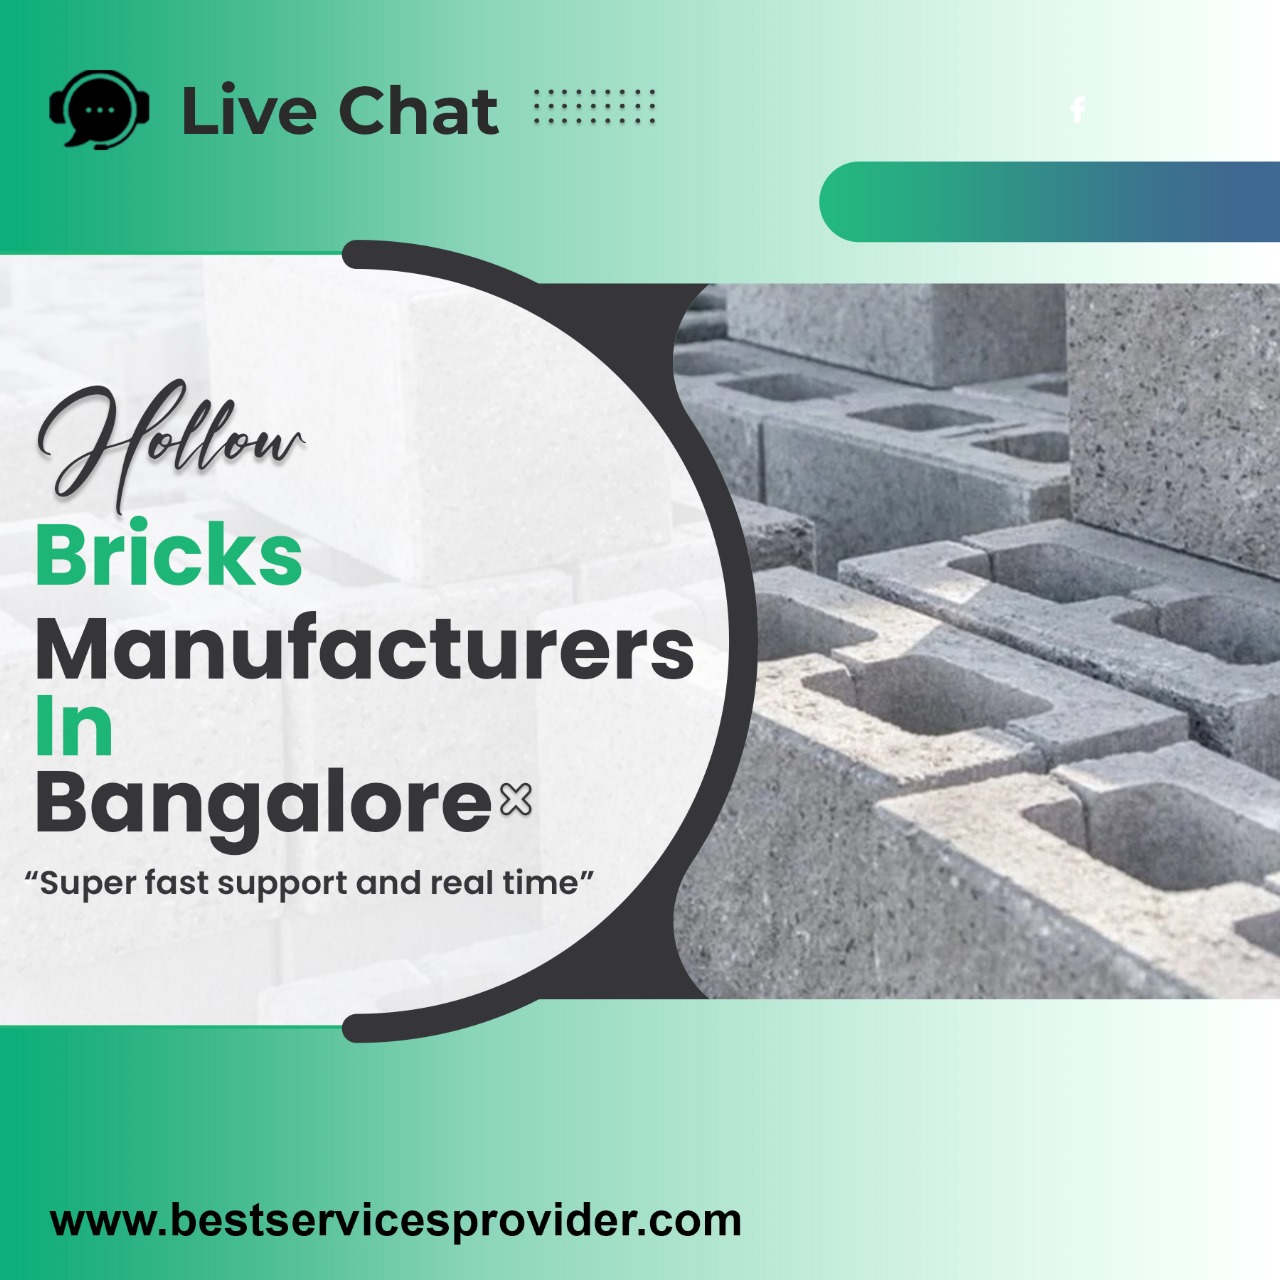 Hollow Bricks Manufacturers In Bangalore